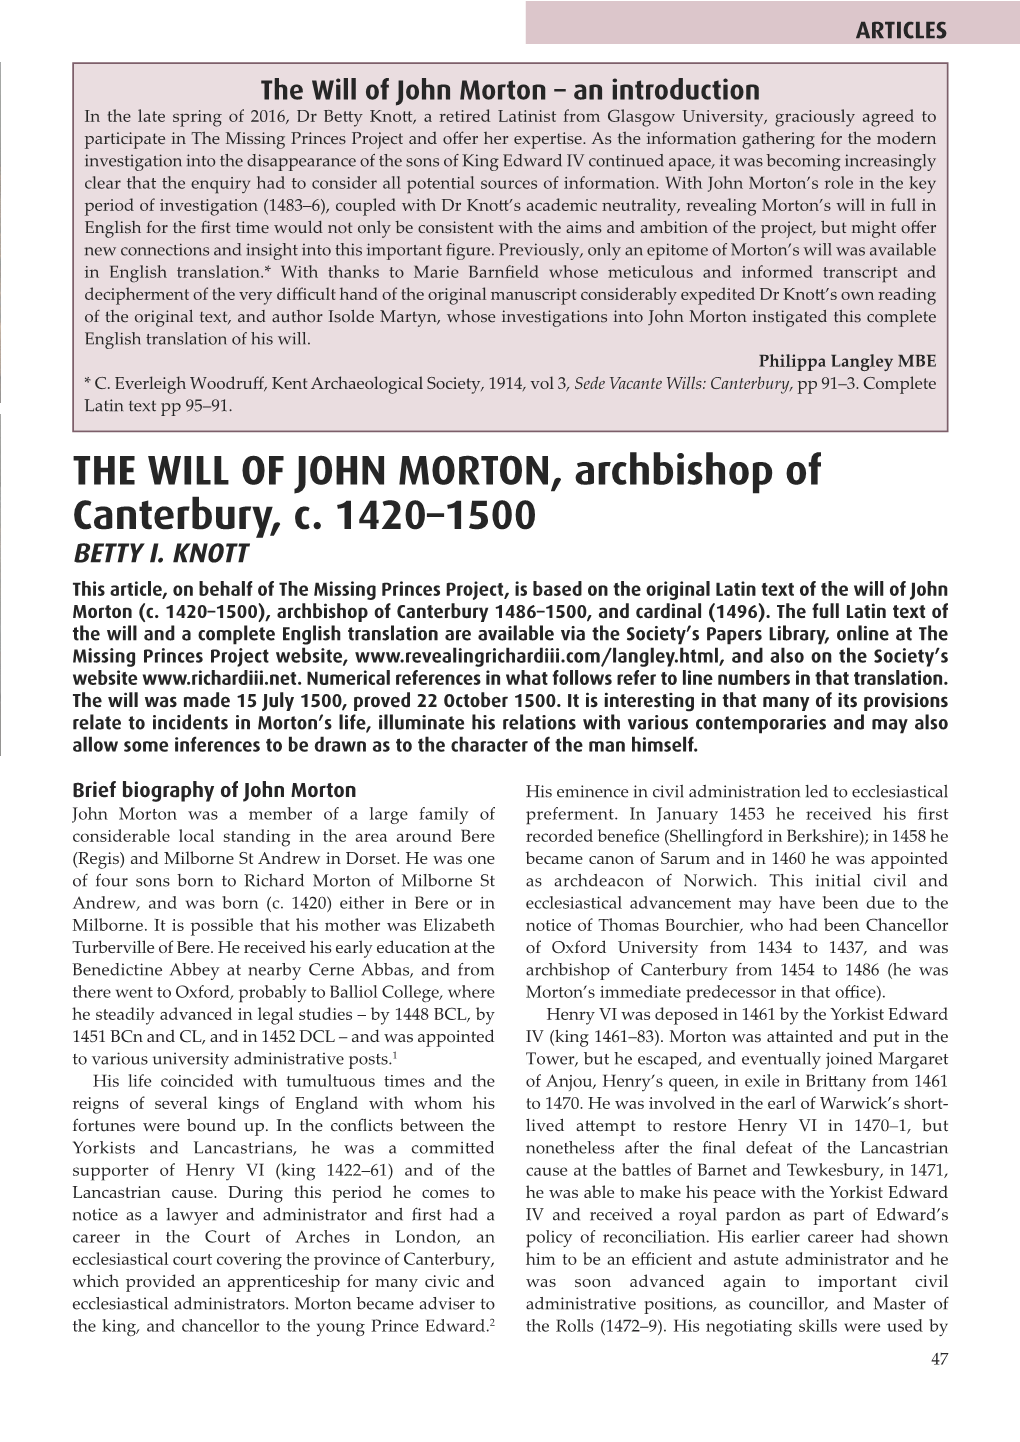 The Will of John Morton